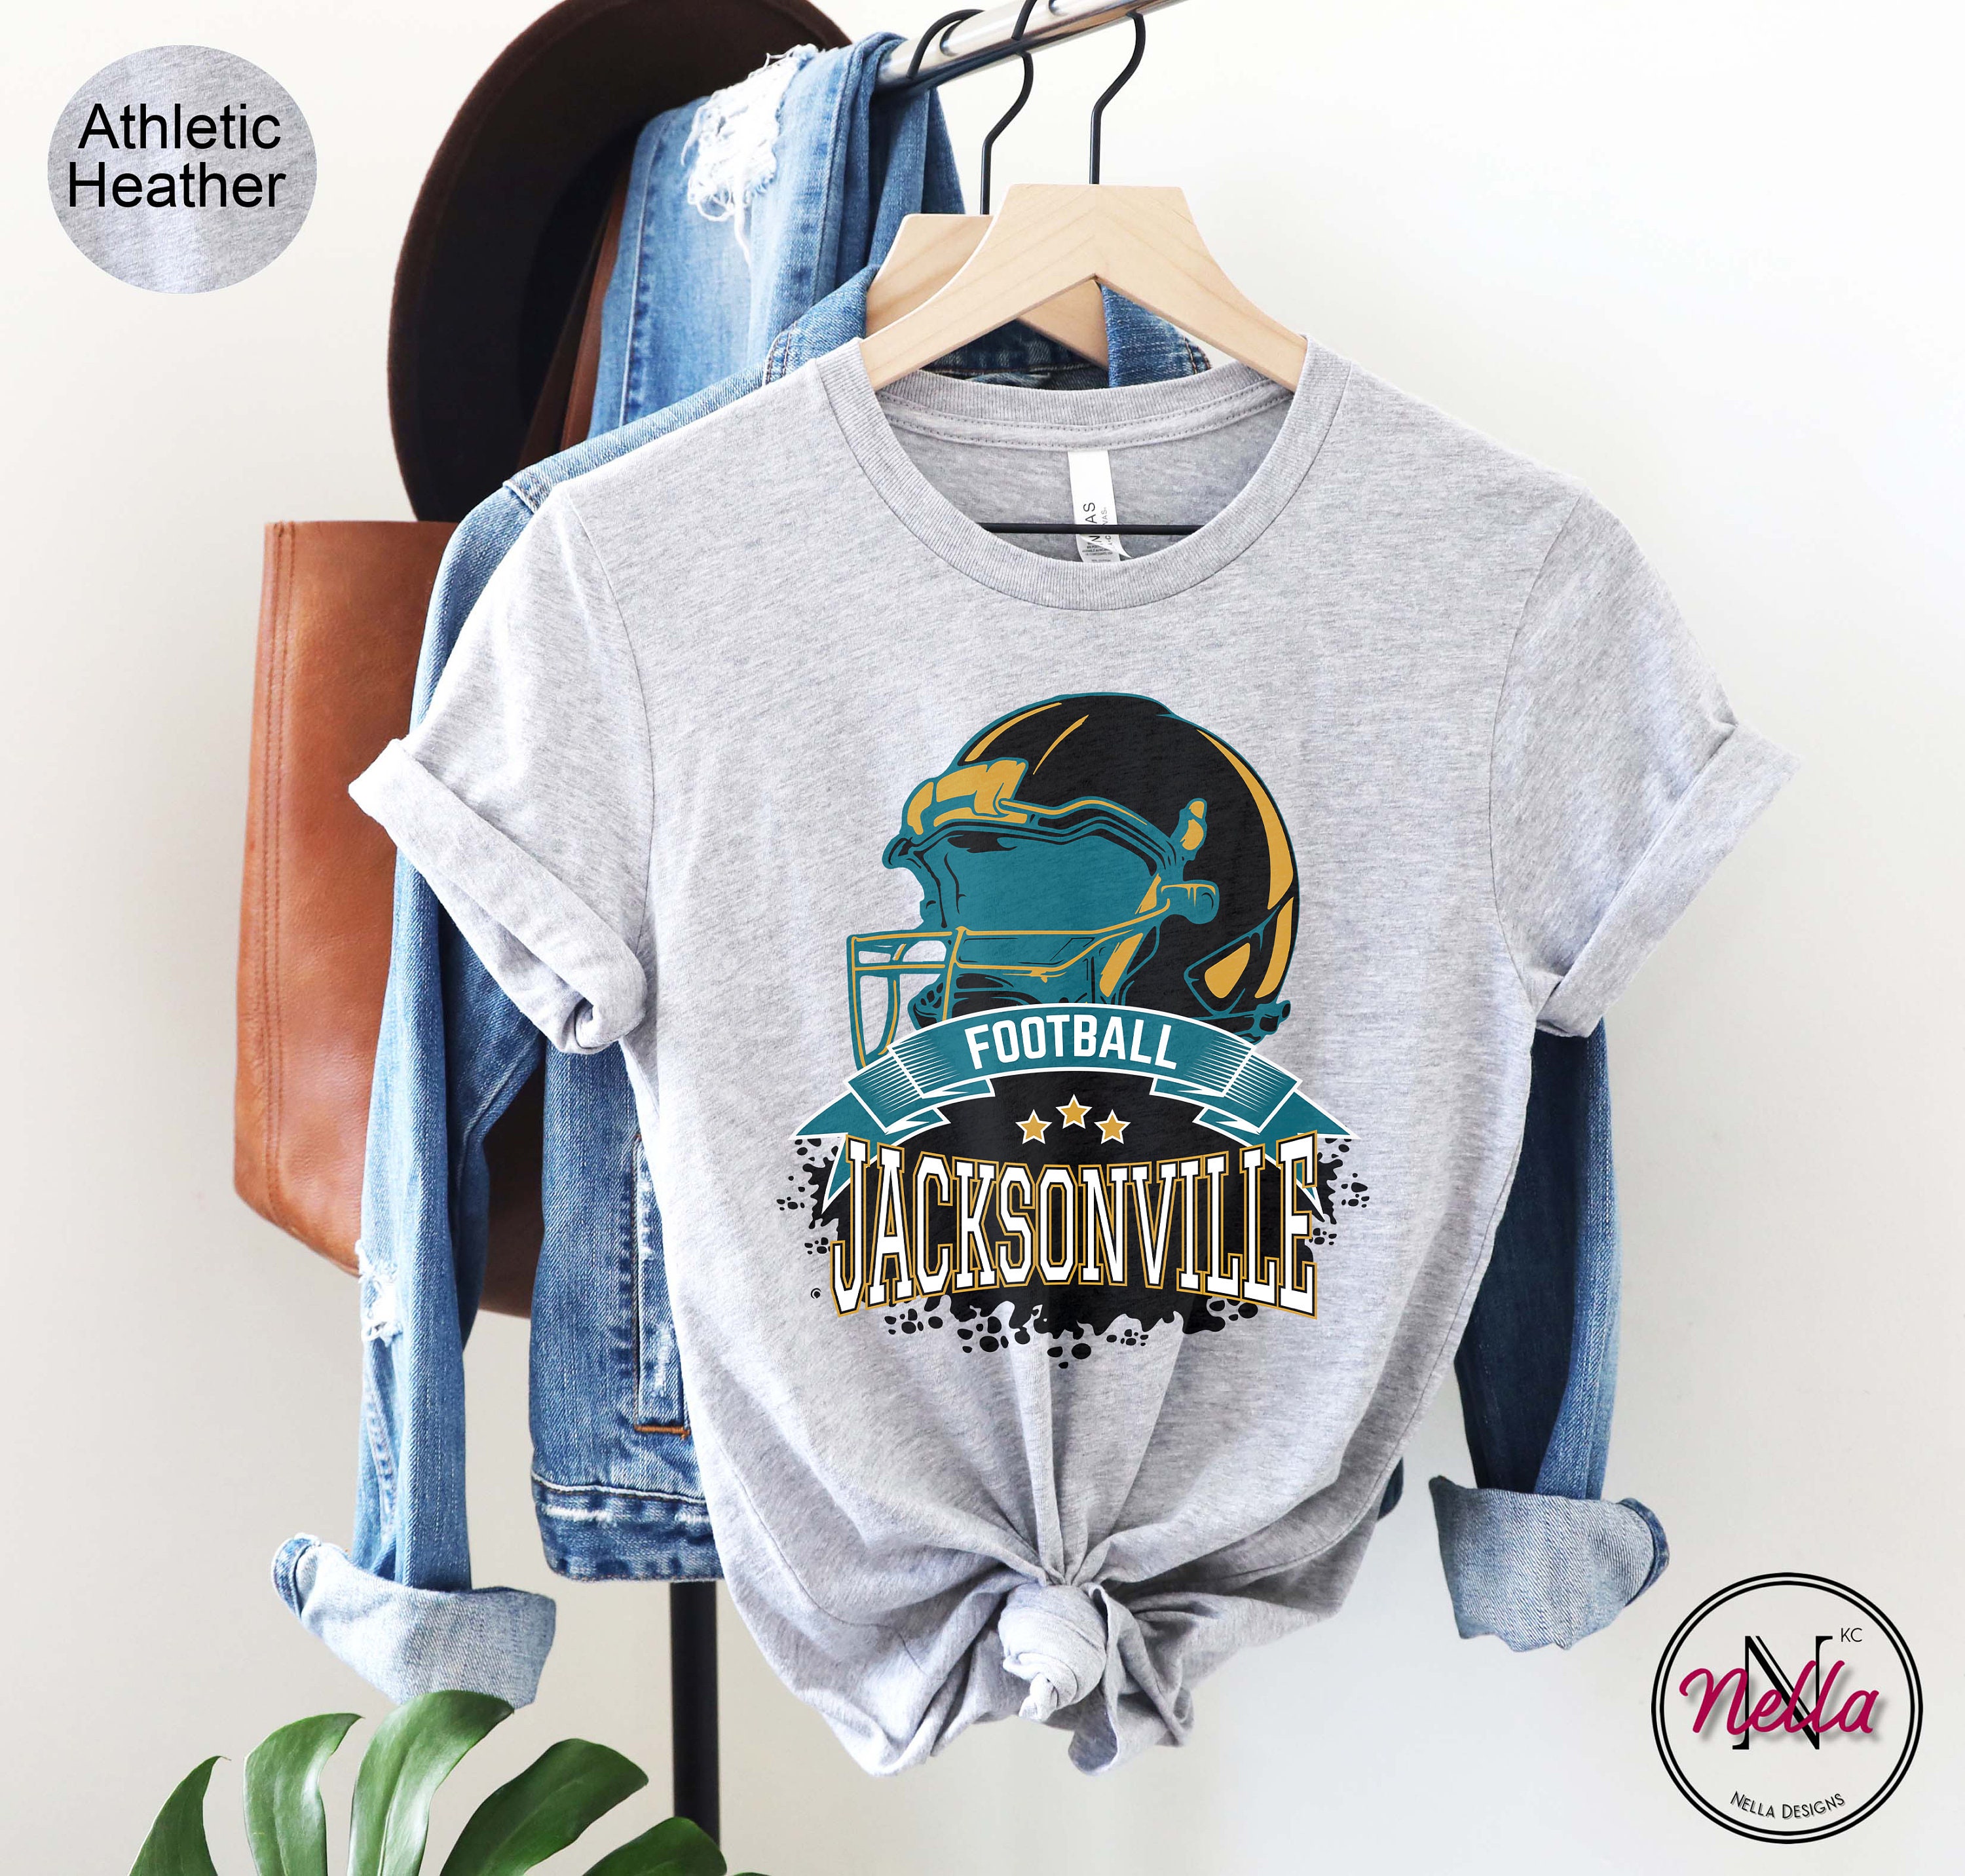 Discover Jacksonville Football Shirt